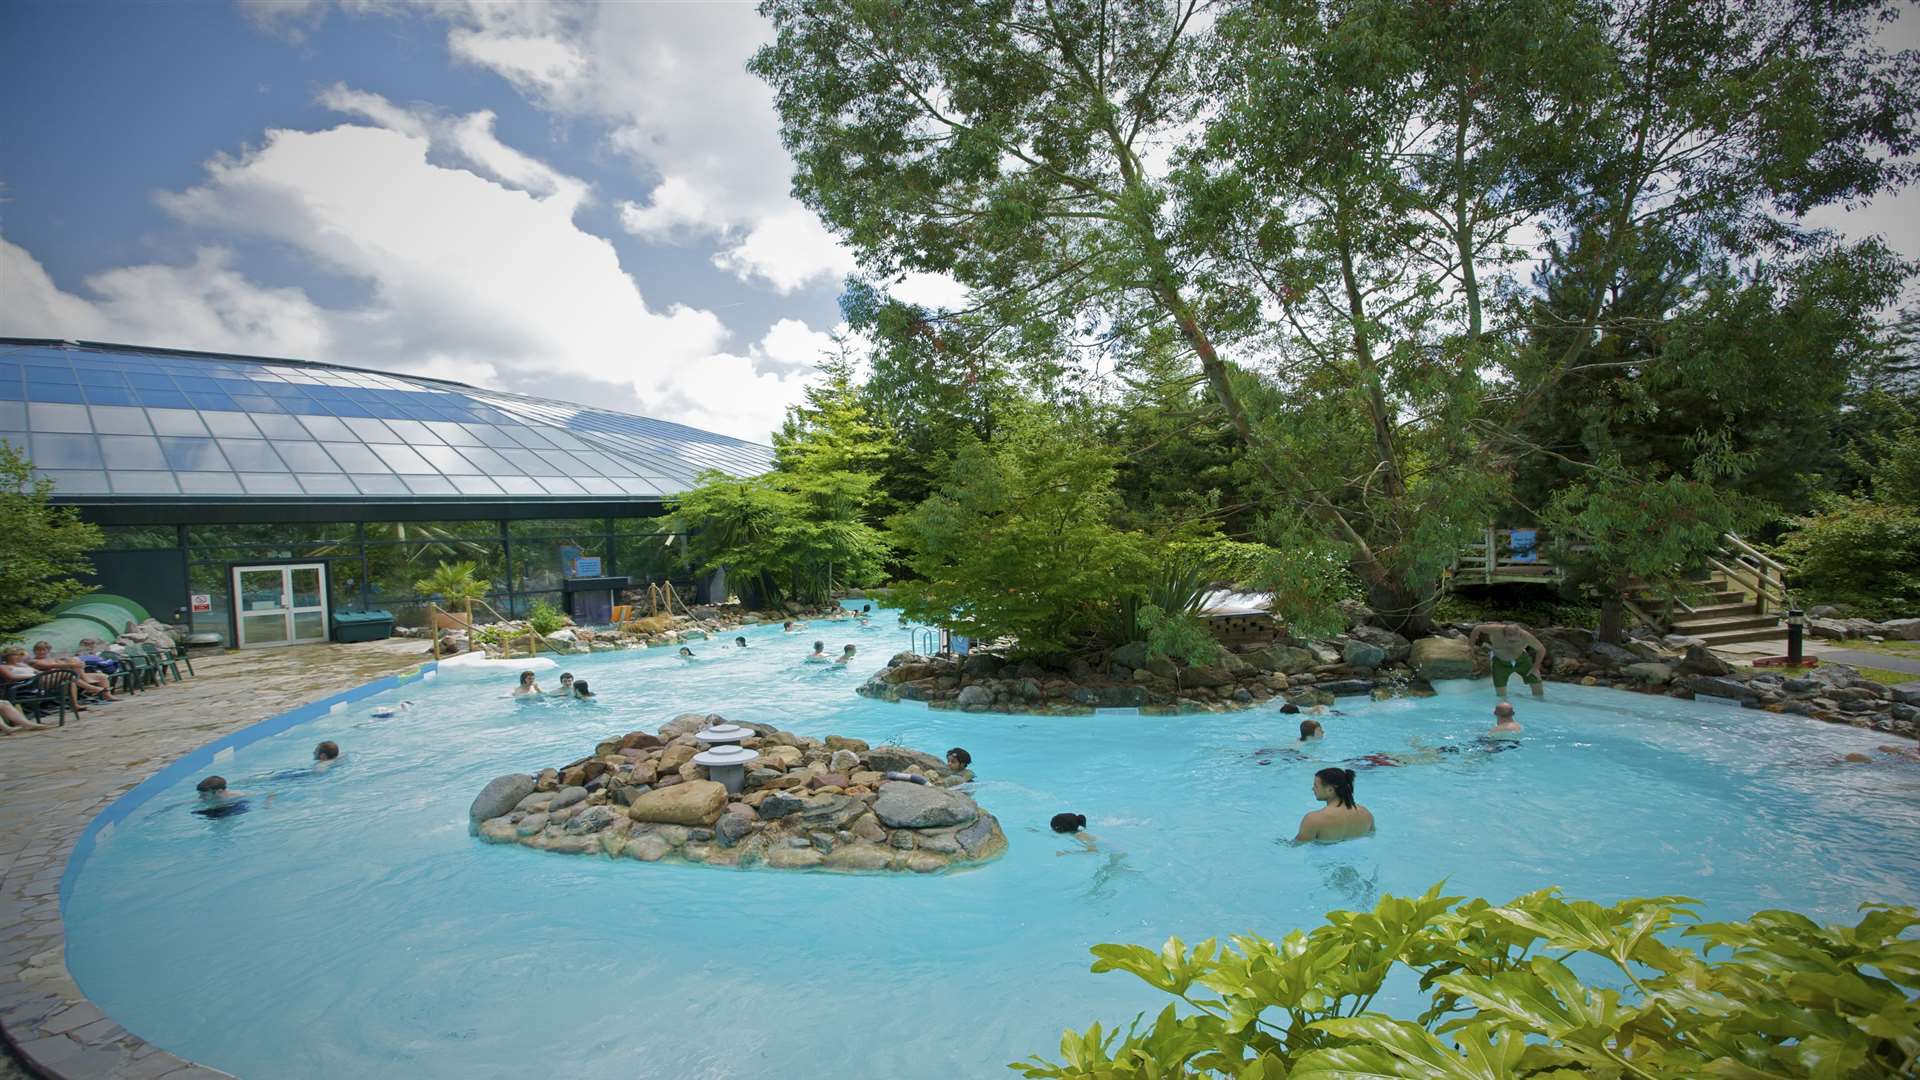 The Subtropical Swimming Paradise at Center Parcs